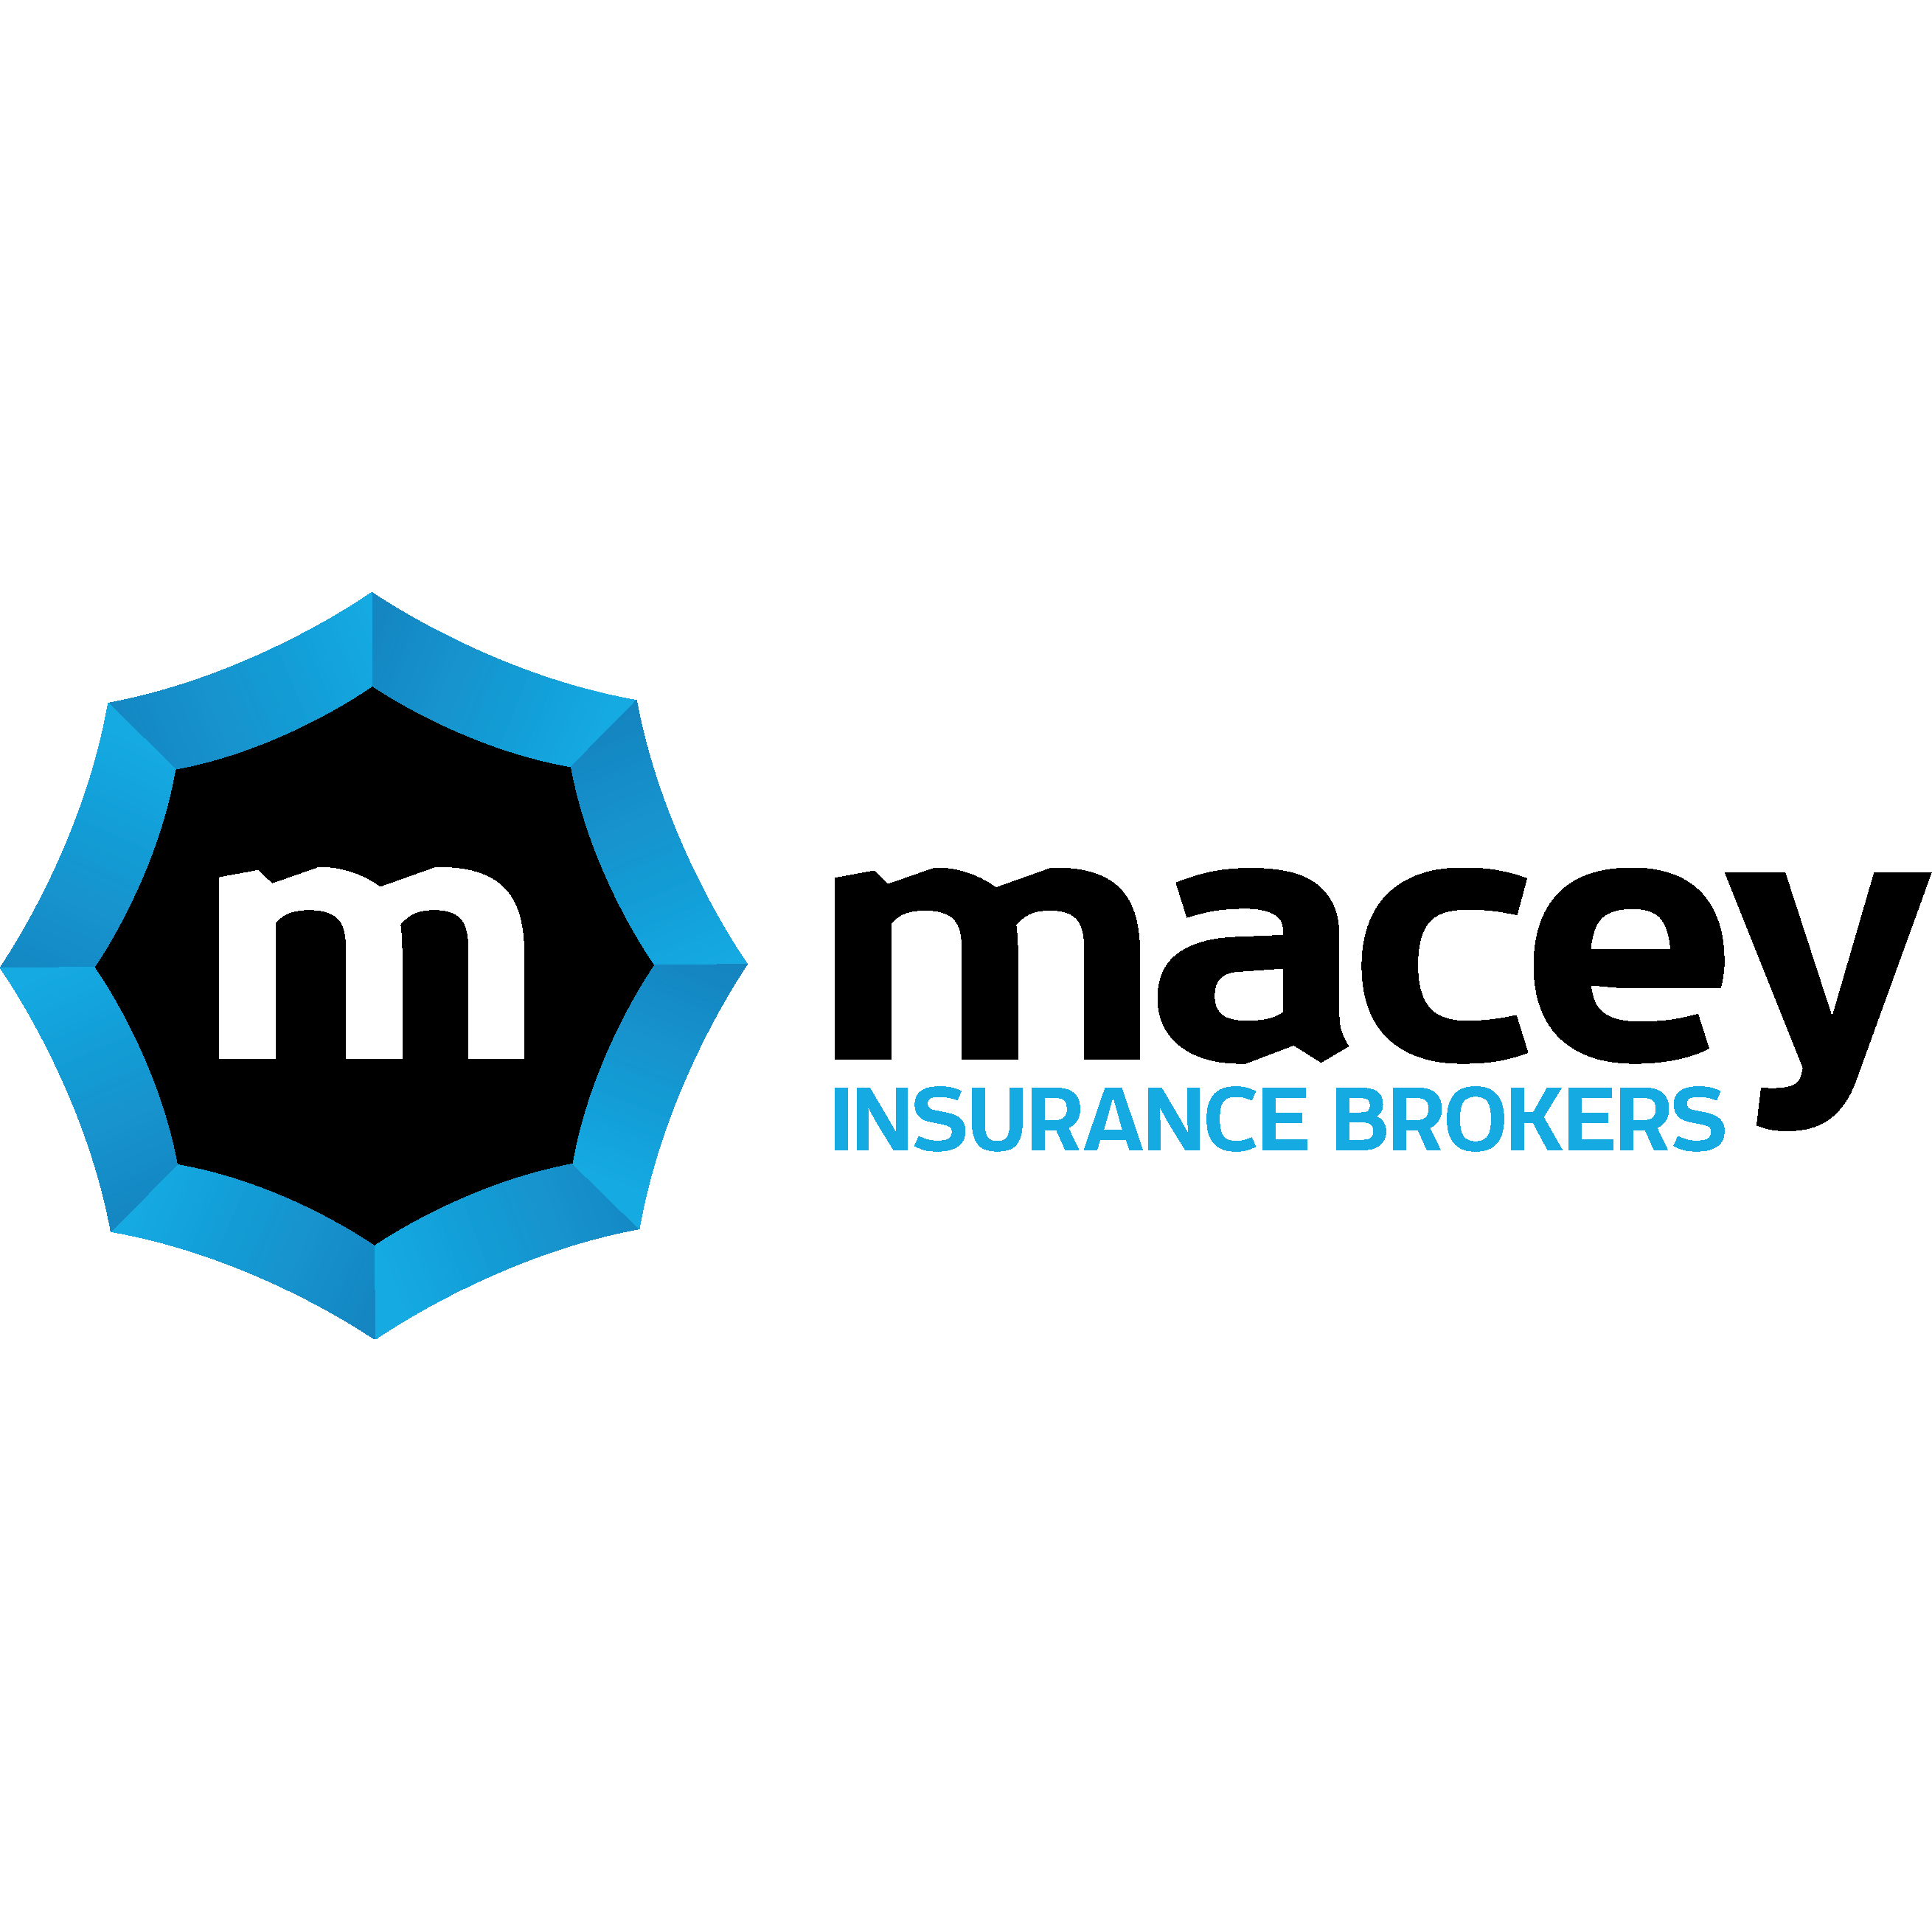 Macey Insurance Brokers Pty Ltd - Camden, NSW 2570 - (02) 4655 7842 | ShowMeLocal.com